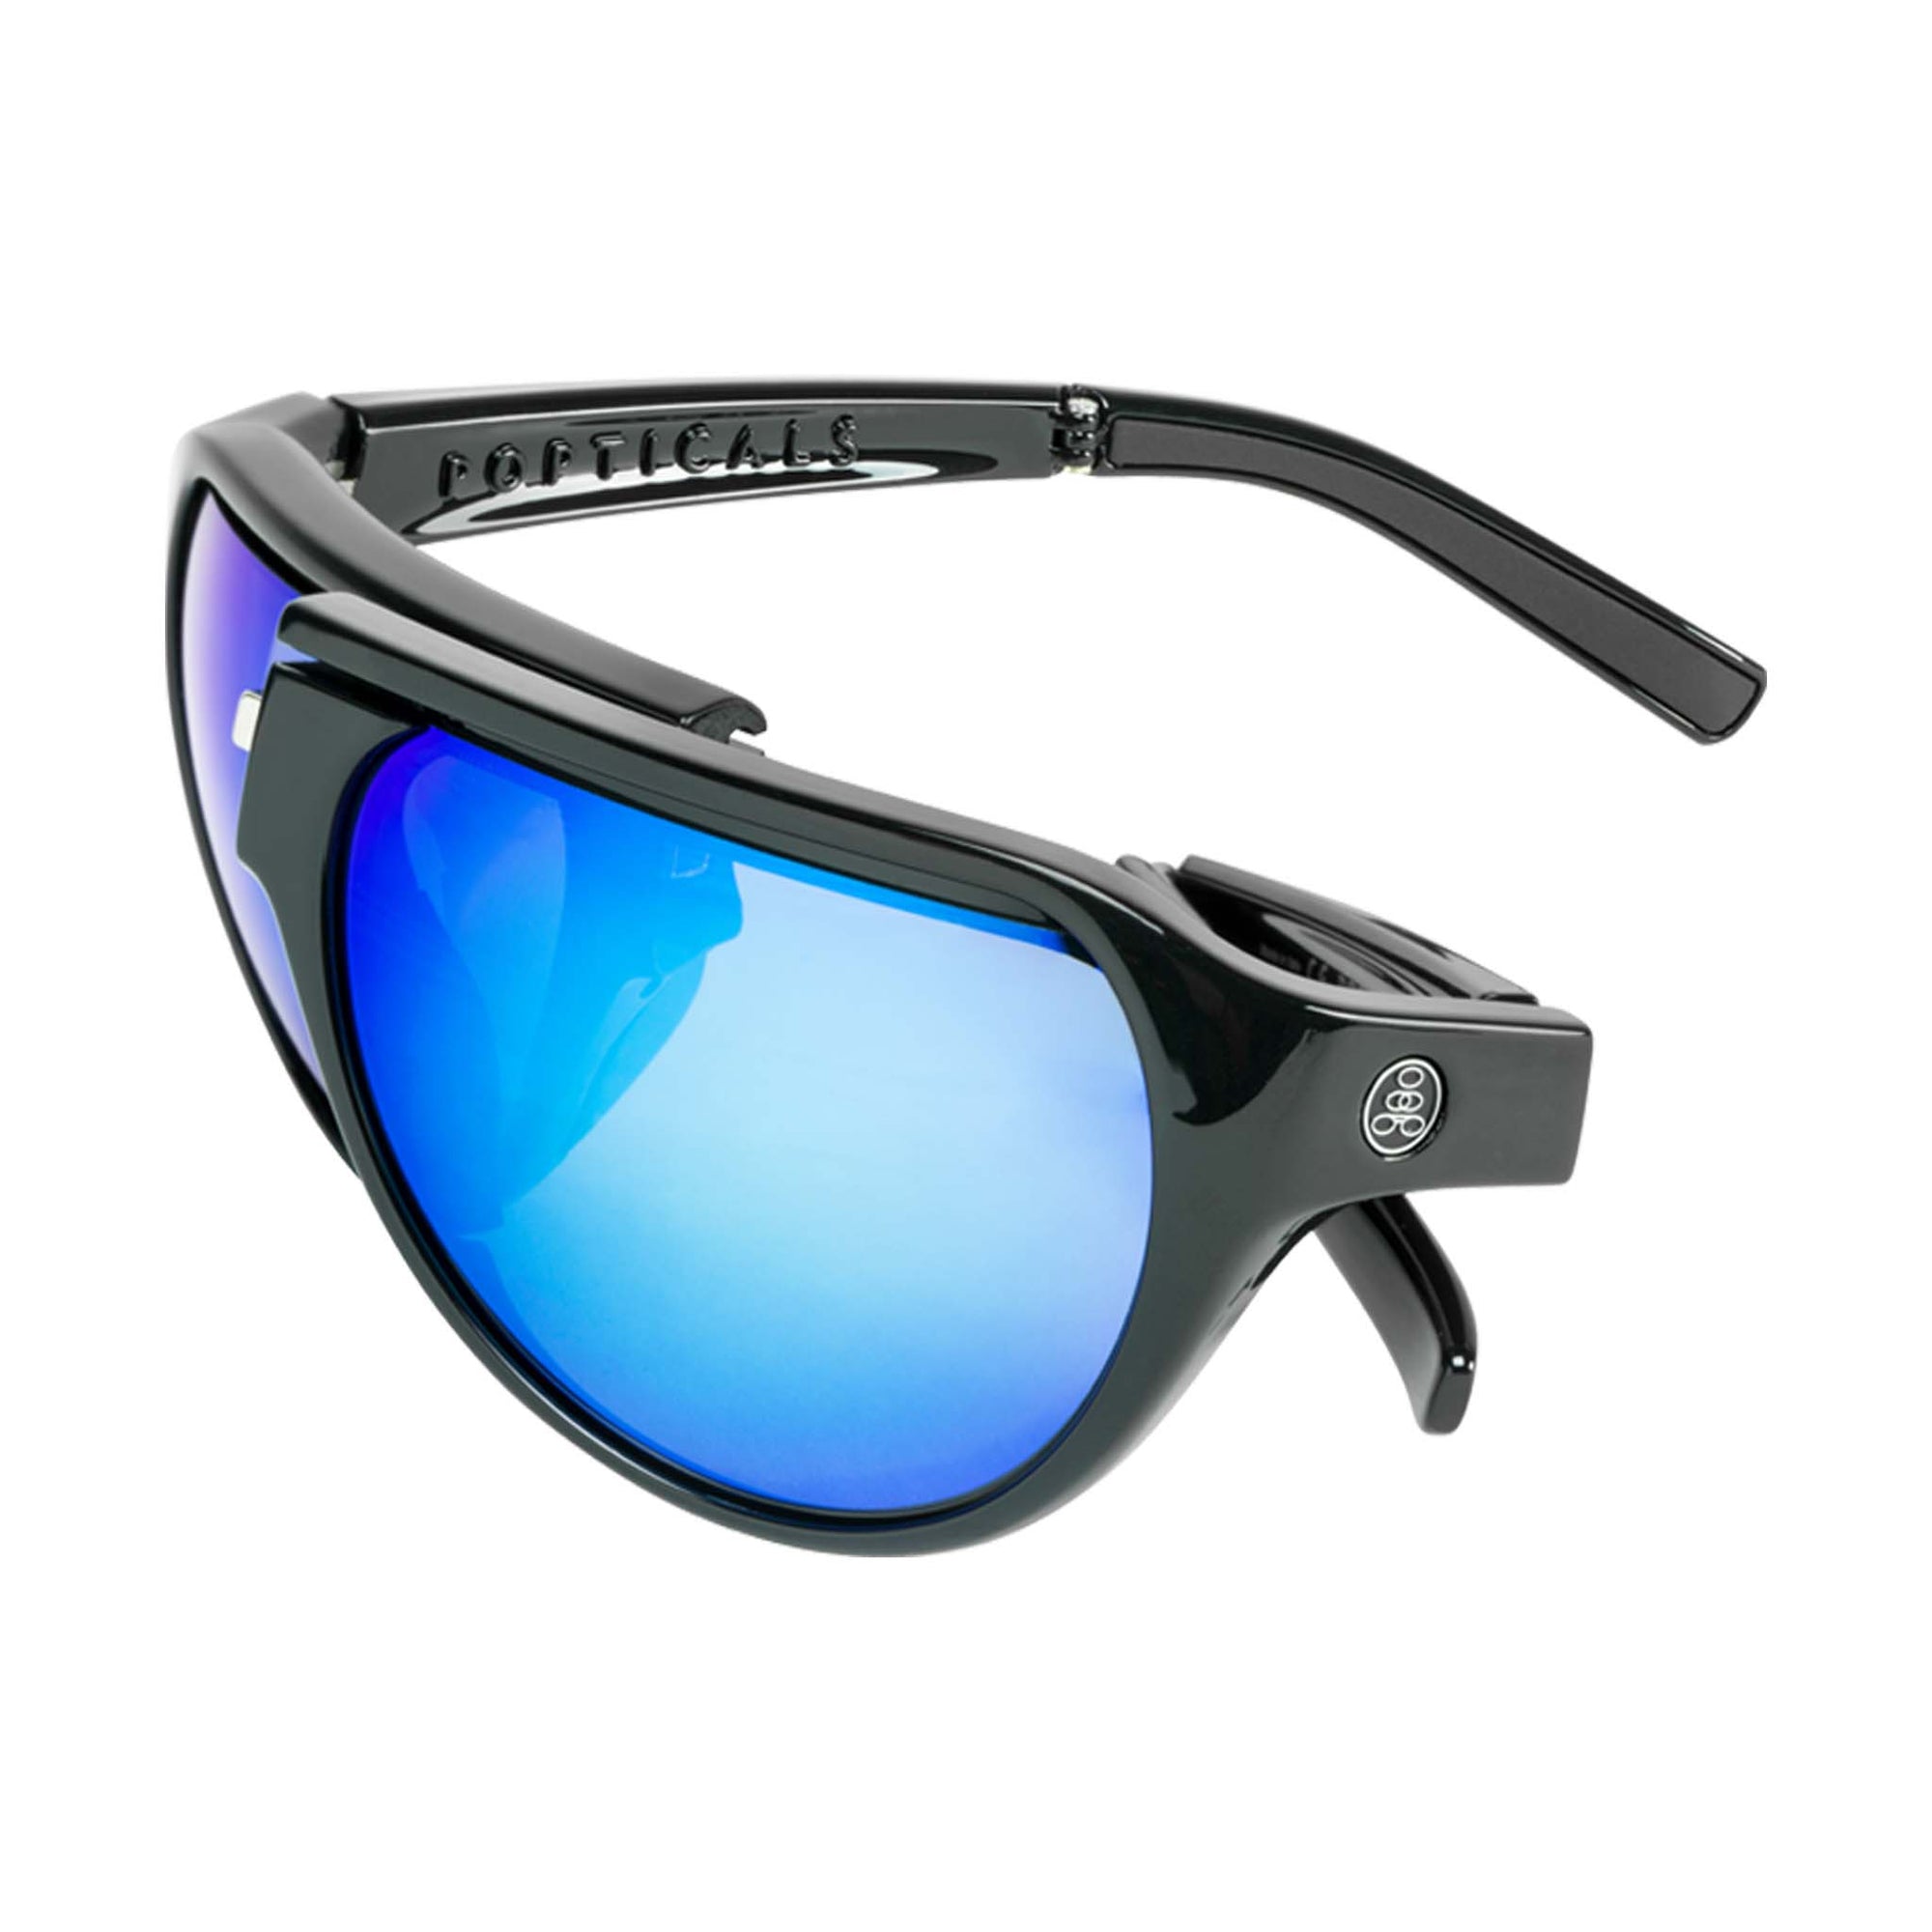 Popticals, Premium Compact Sunglasses, PopAir, 300010-BGUN, Polarized Sunglasses, Gloss Black Frame, Gray Lenses with Blue Mirror Finish, Glam View